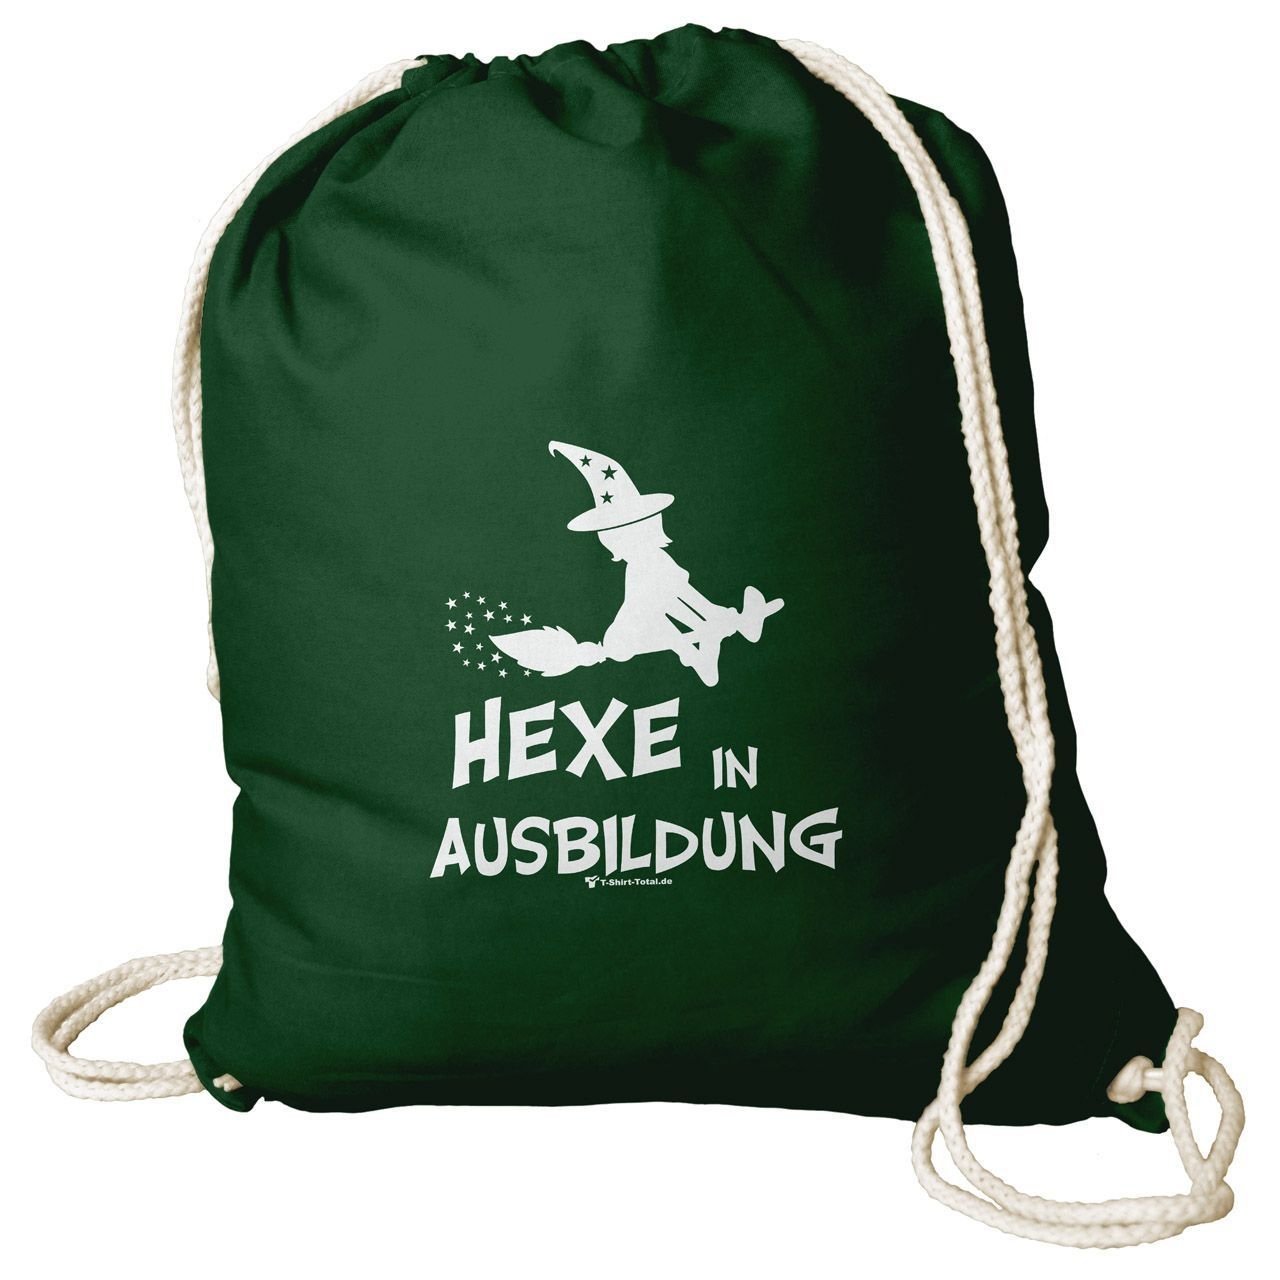 Hexe in Ausbildung Rucksack Beutel dunkelgrün